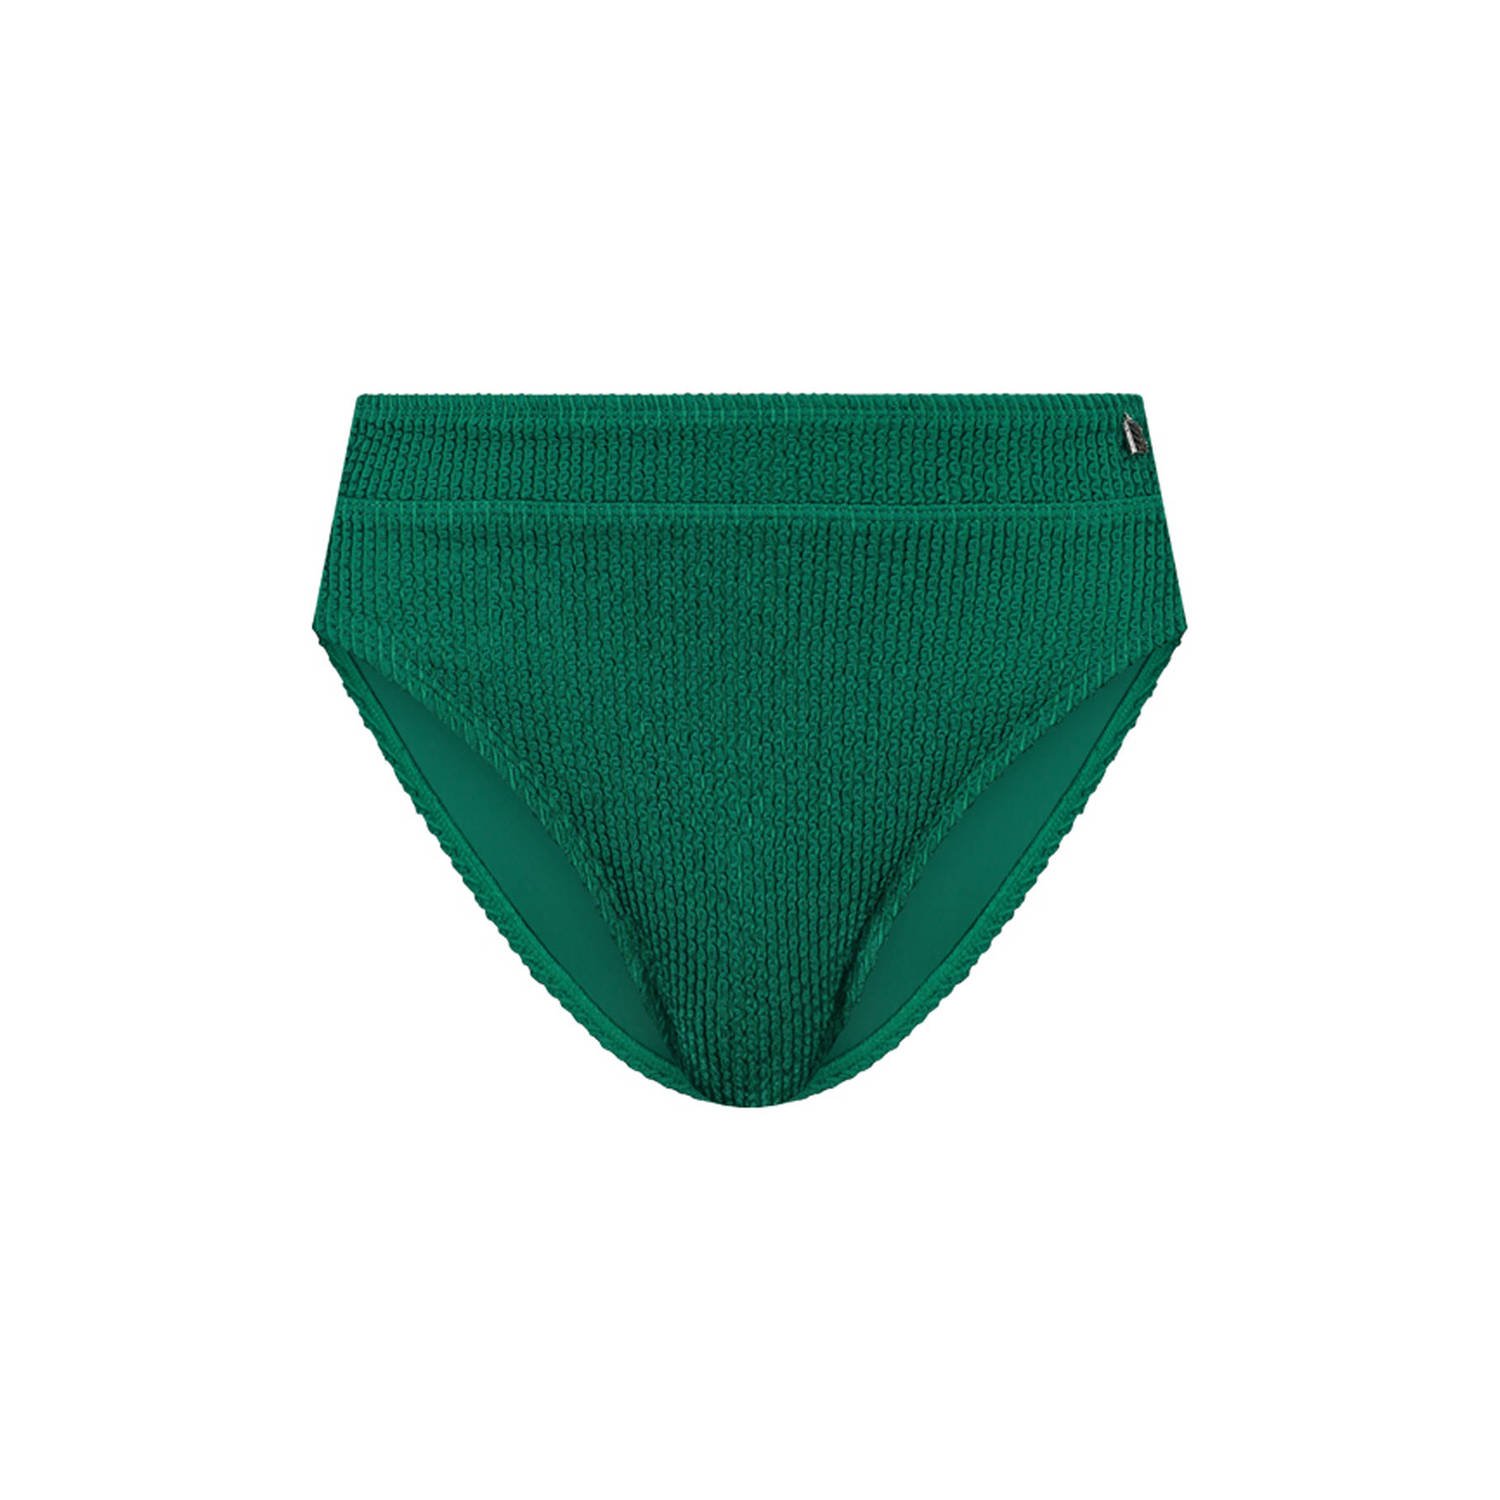 Beachlife high waist bikinibroekje met textuur groen